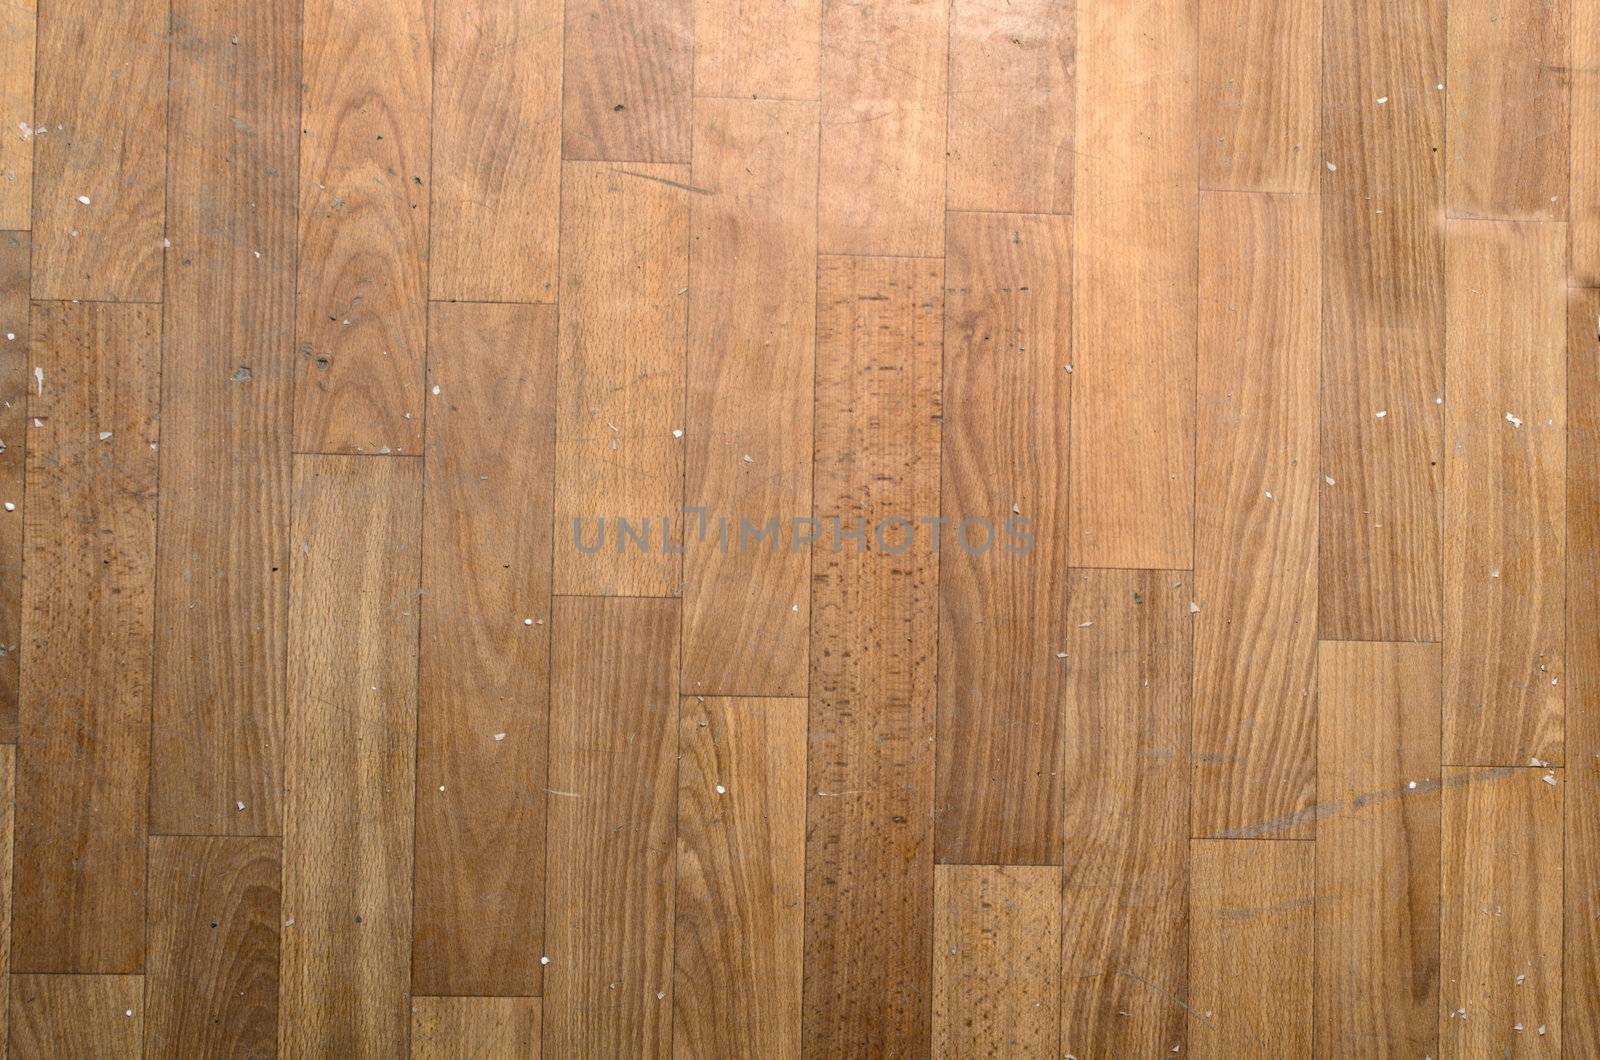 Dirty wooden parquet | Texture by zakaz